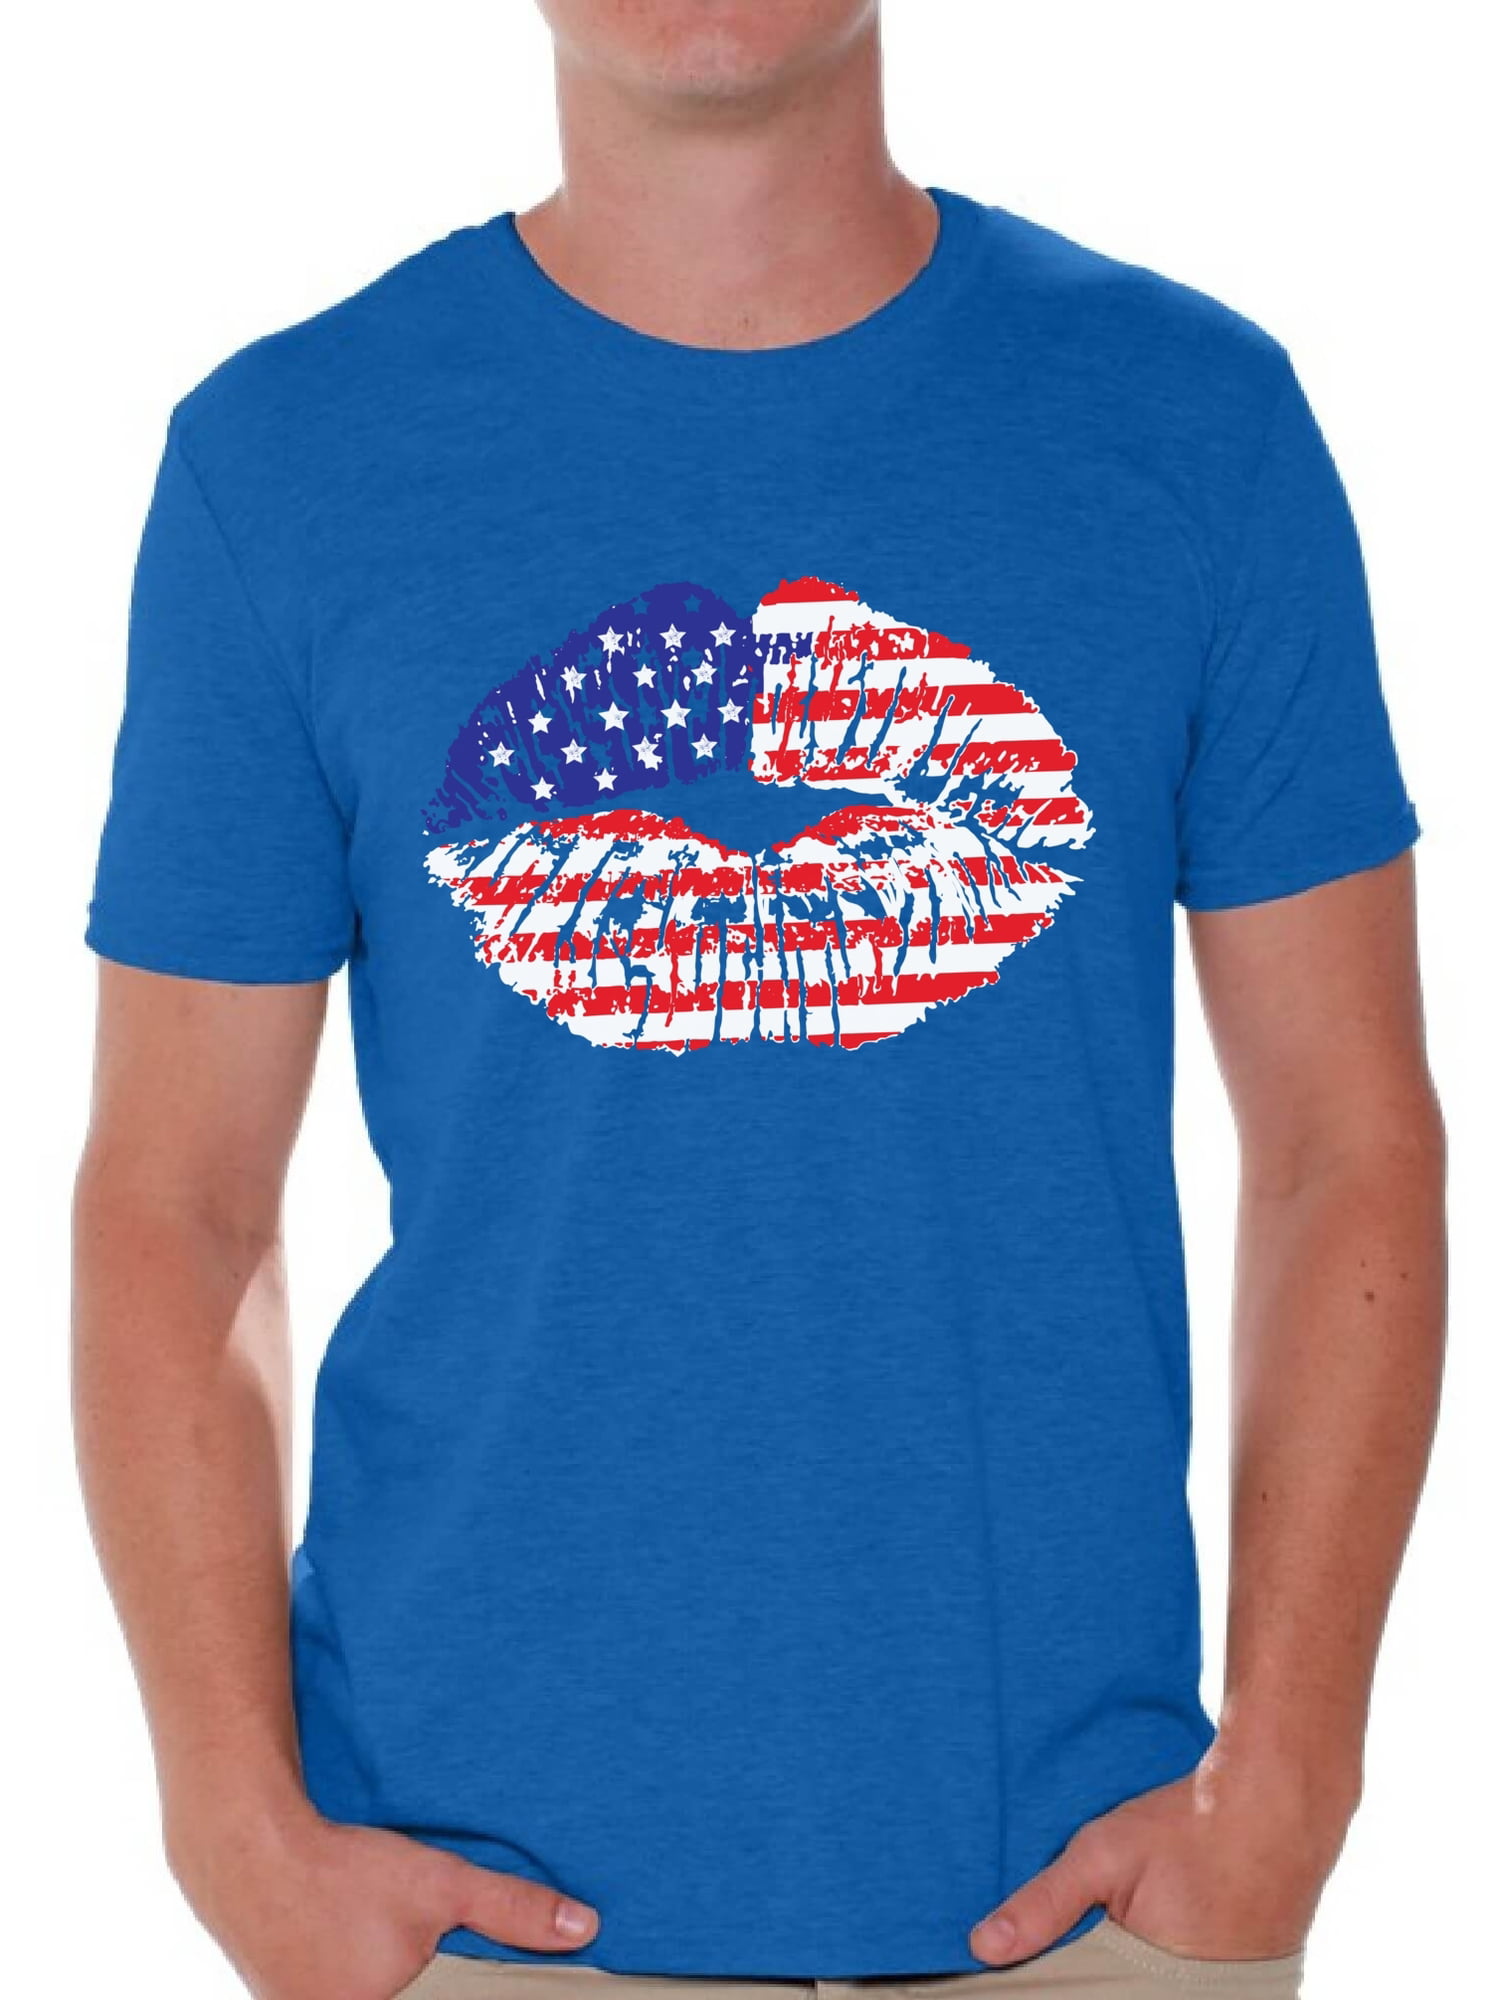 USA Lips Shirt 4th of July Shirt Americana Shirt USA Shirt Lips T Shirt Red White and Blue Tees Independence Day Shirt Flag Lips Shirt